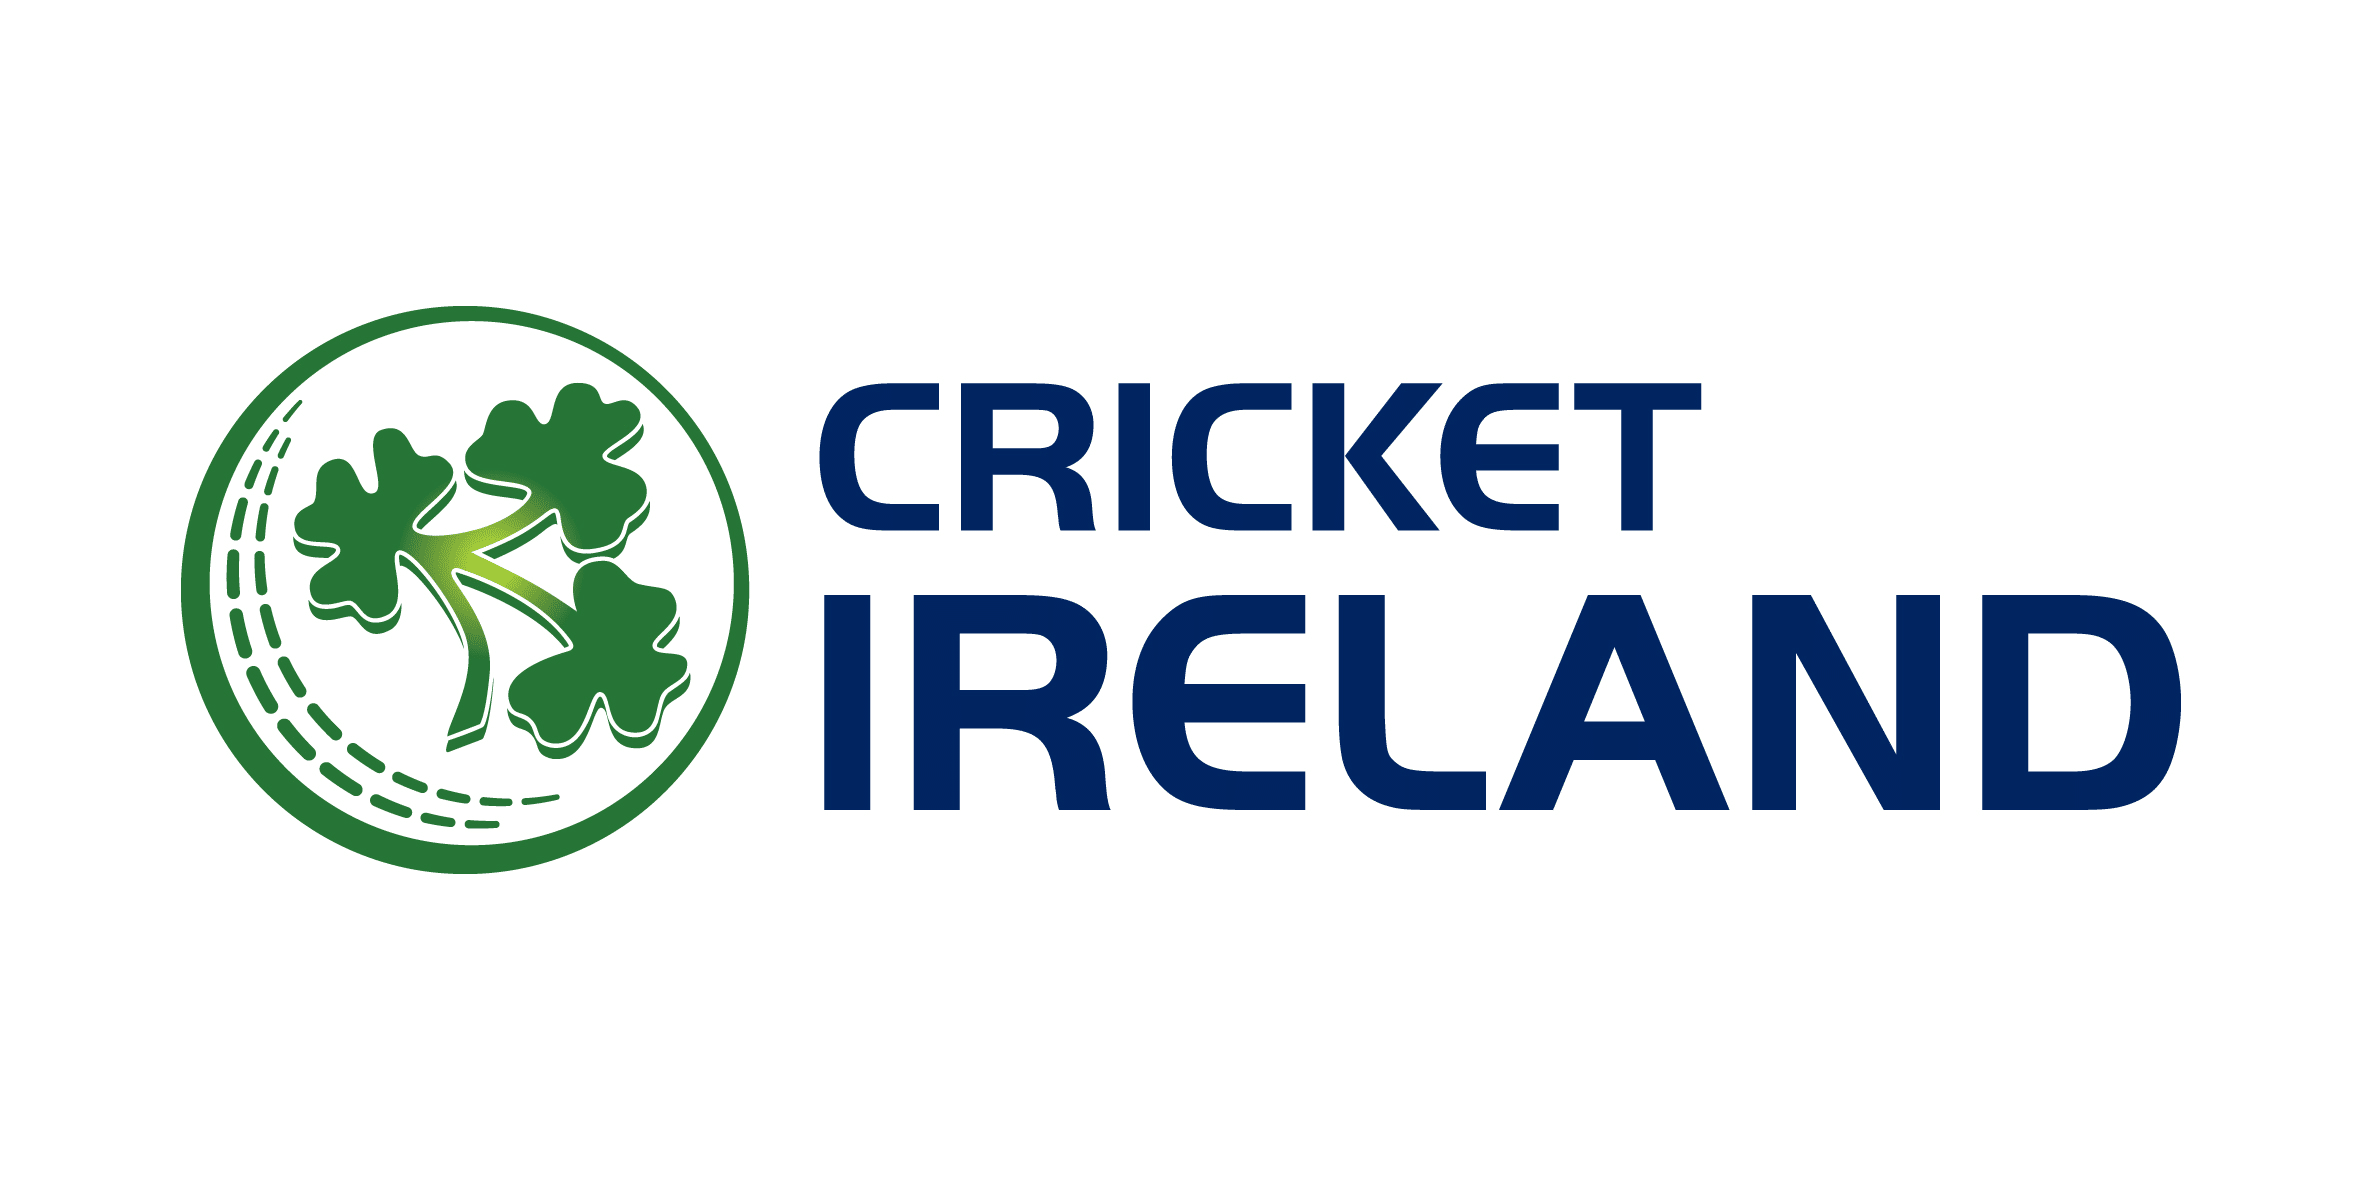 Ireland Cricket Team Logo